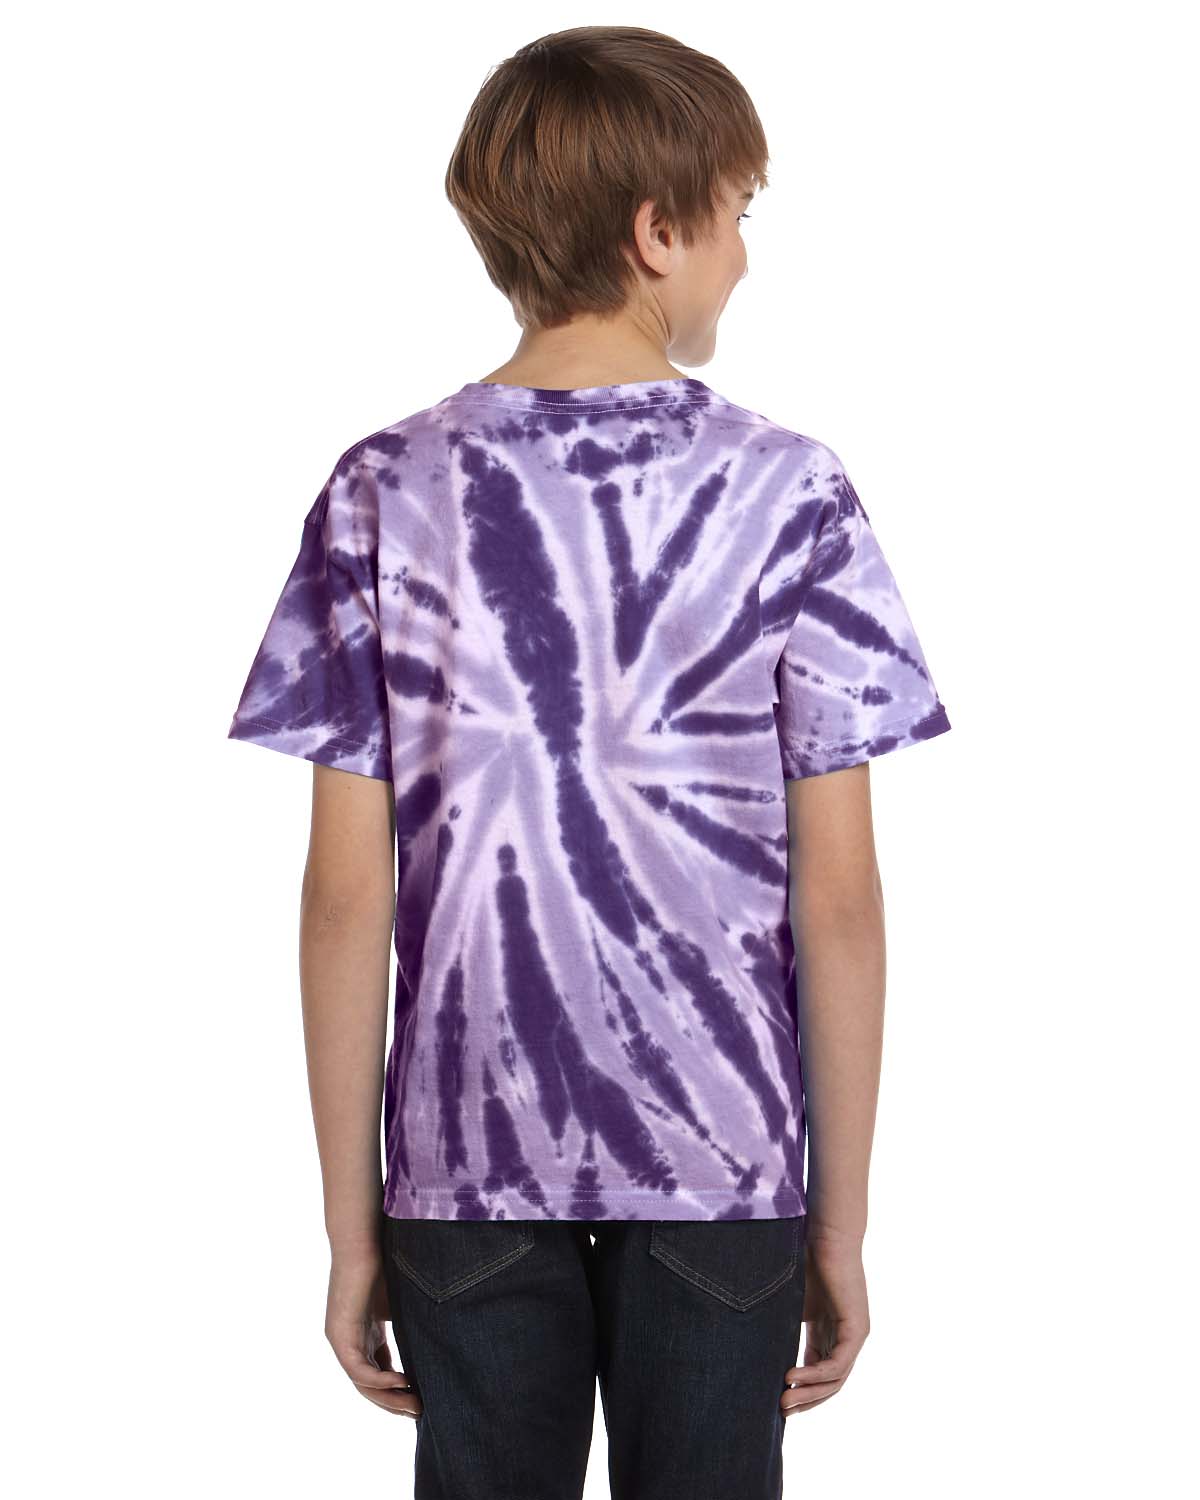 purple tie dyed t shirt jiffy shirt